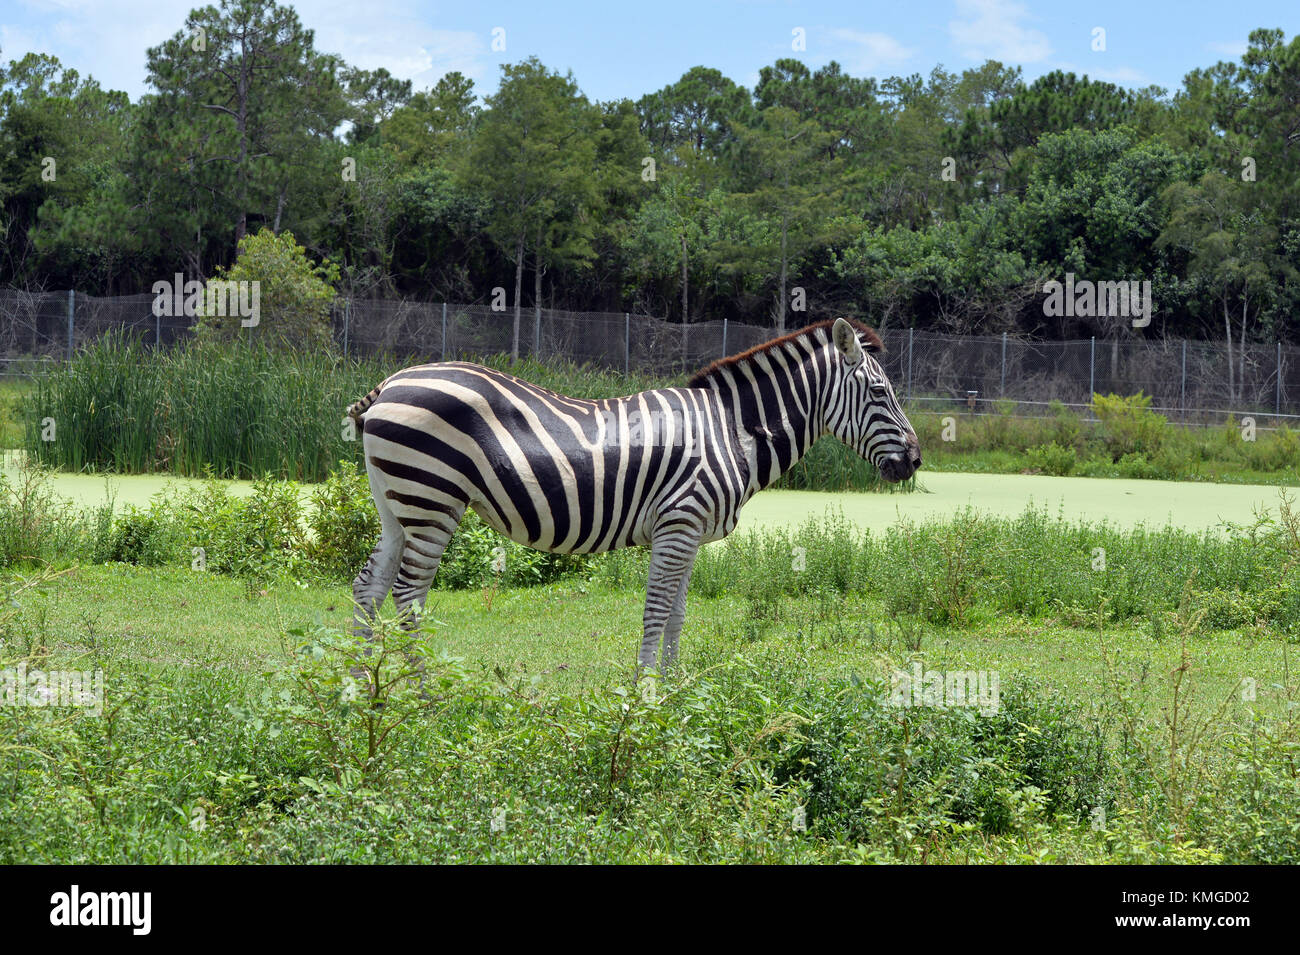 Loxahatchee, FL - 17. AUGUST: Zebra bei Lion Country Safari am 17. August 2015 in Loxahatchee, Florida. Personen: Zebra Transmission Ref: FLXX Hoo-Me.com / MediaPunch Stockfoto